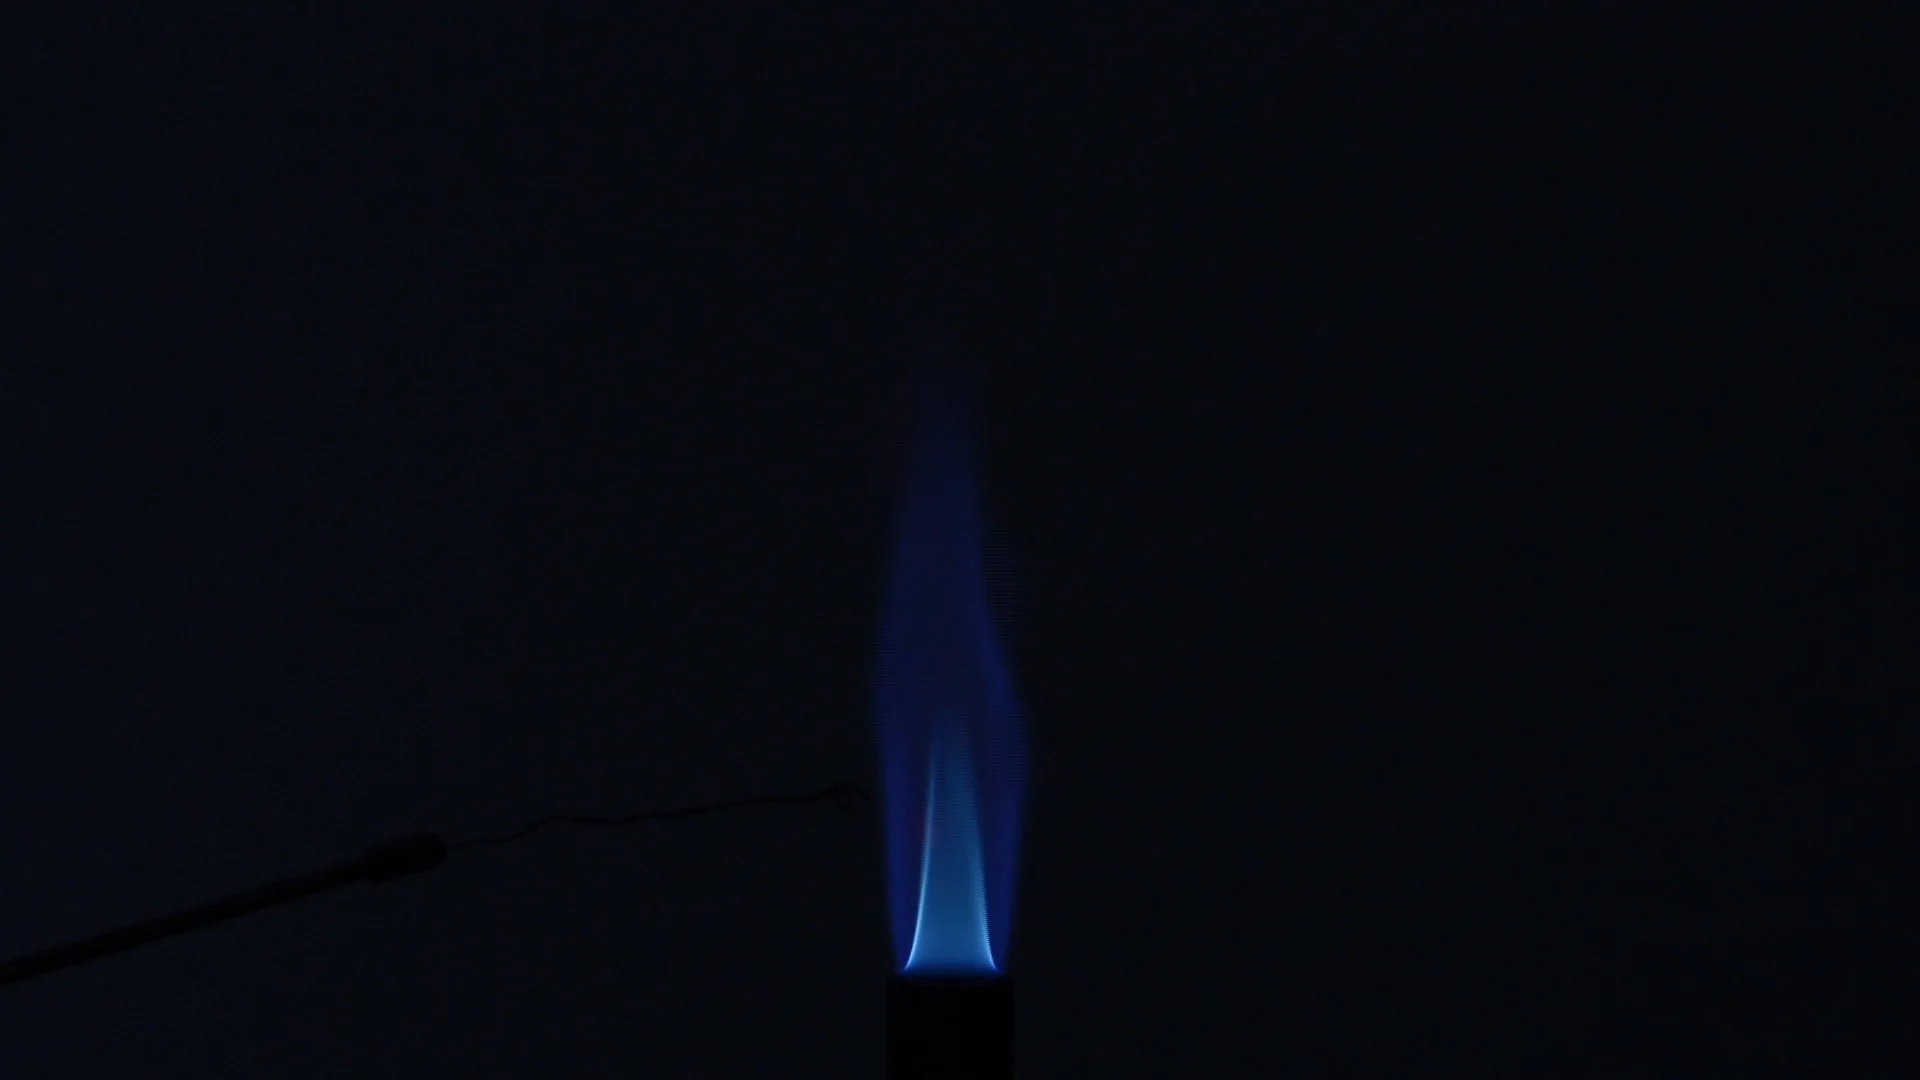 lithium flame